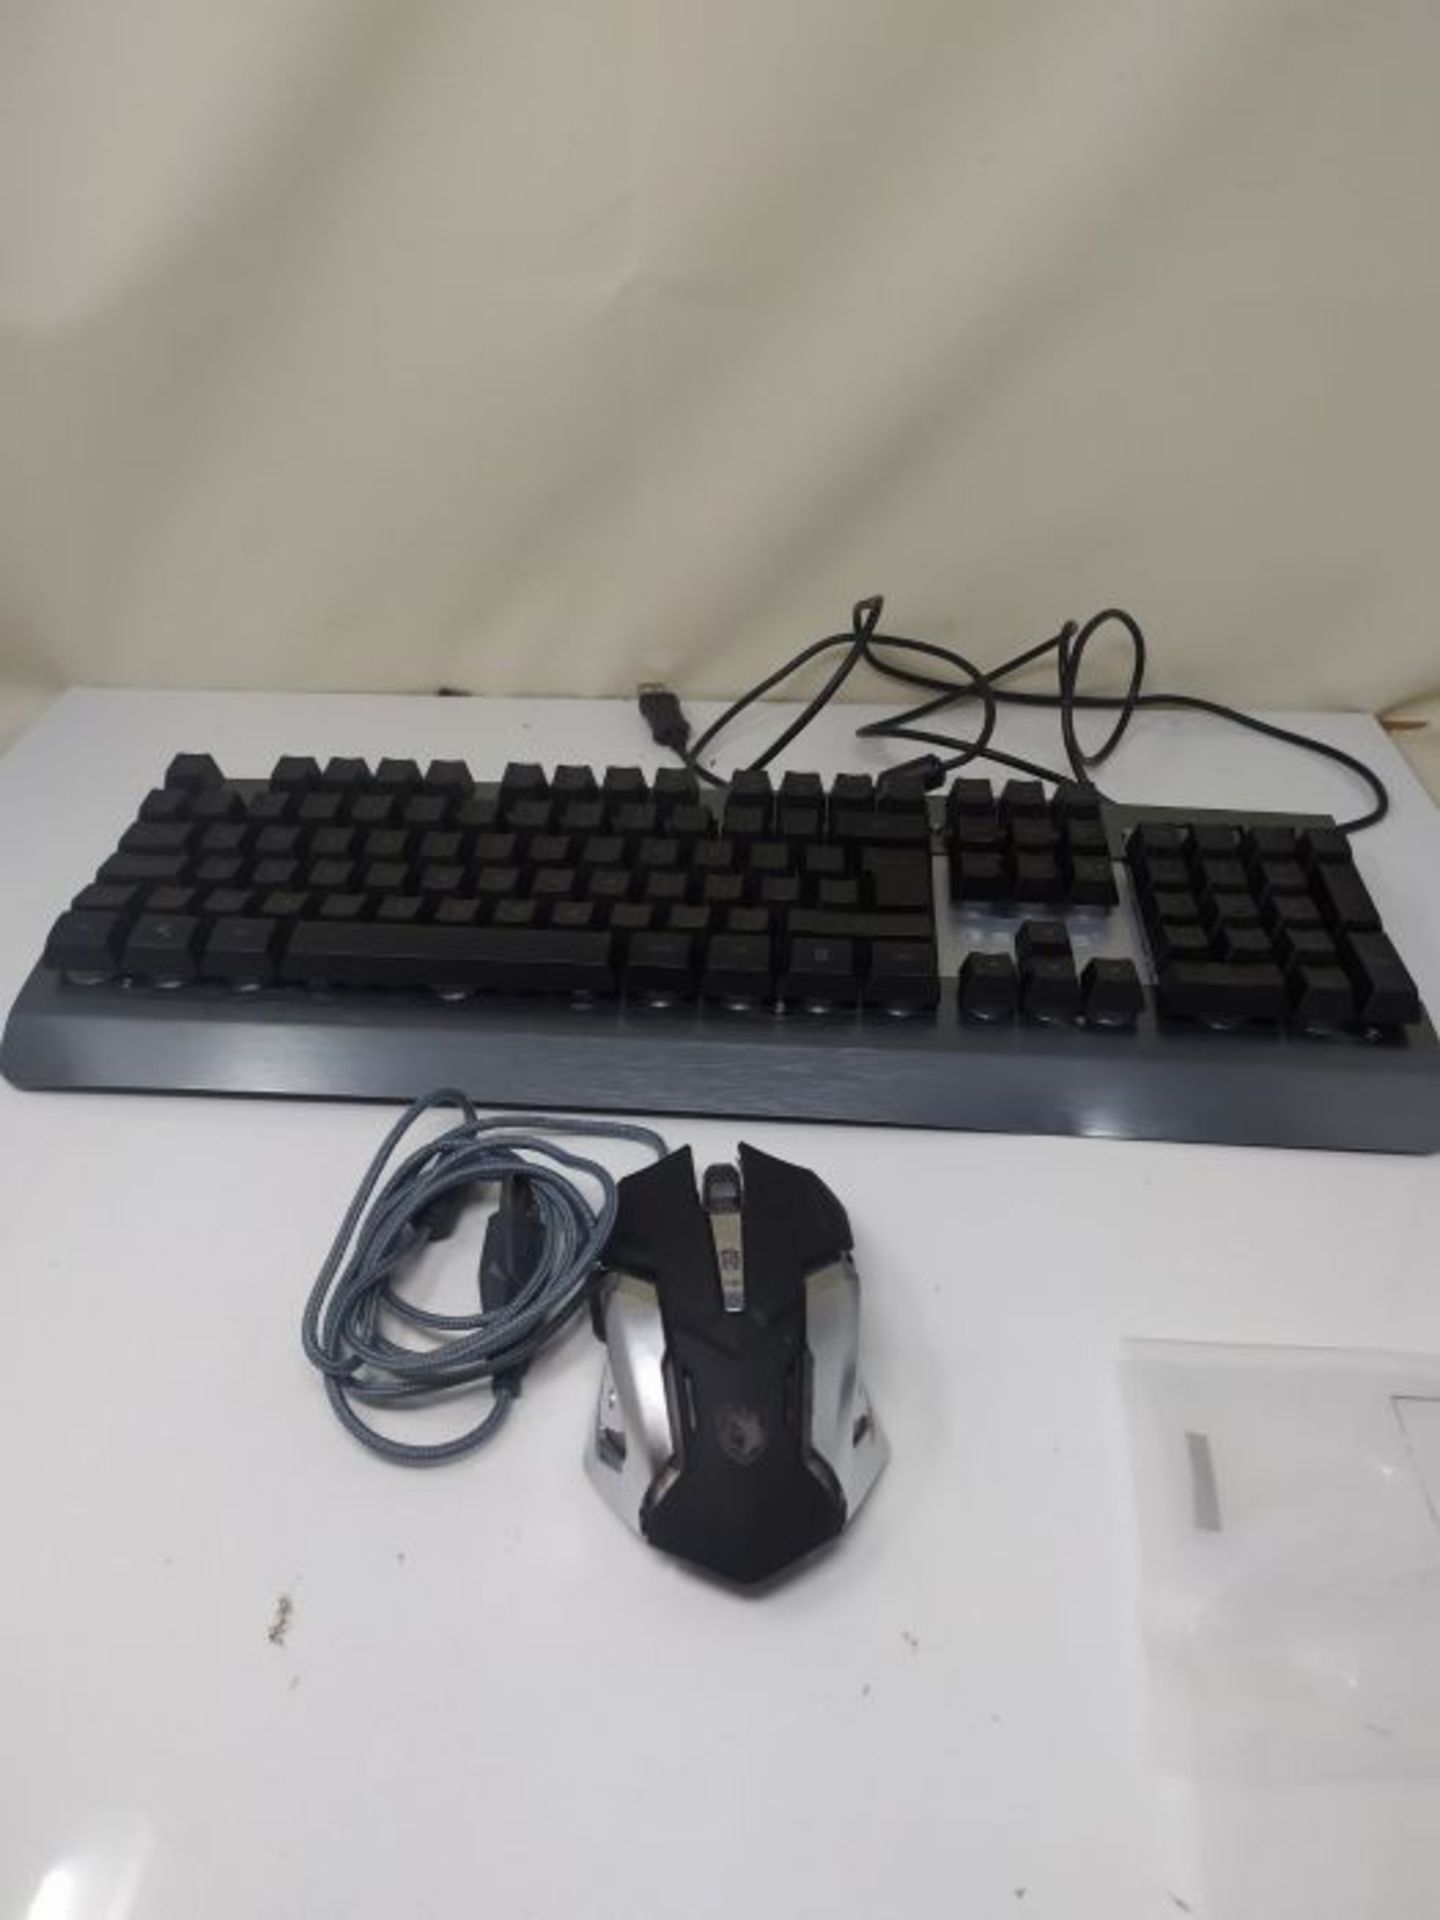 Gaming Keyboard (UK layout), SADES Whisper LED Backlit USB Wired Keyboard and Mouse Co - Image 2 of 2